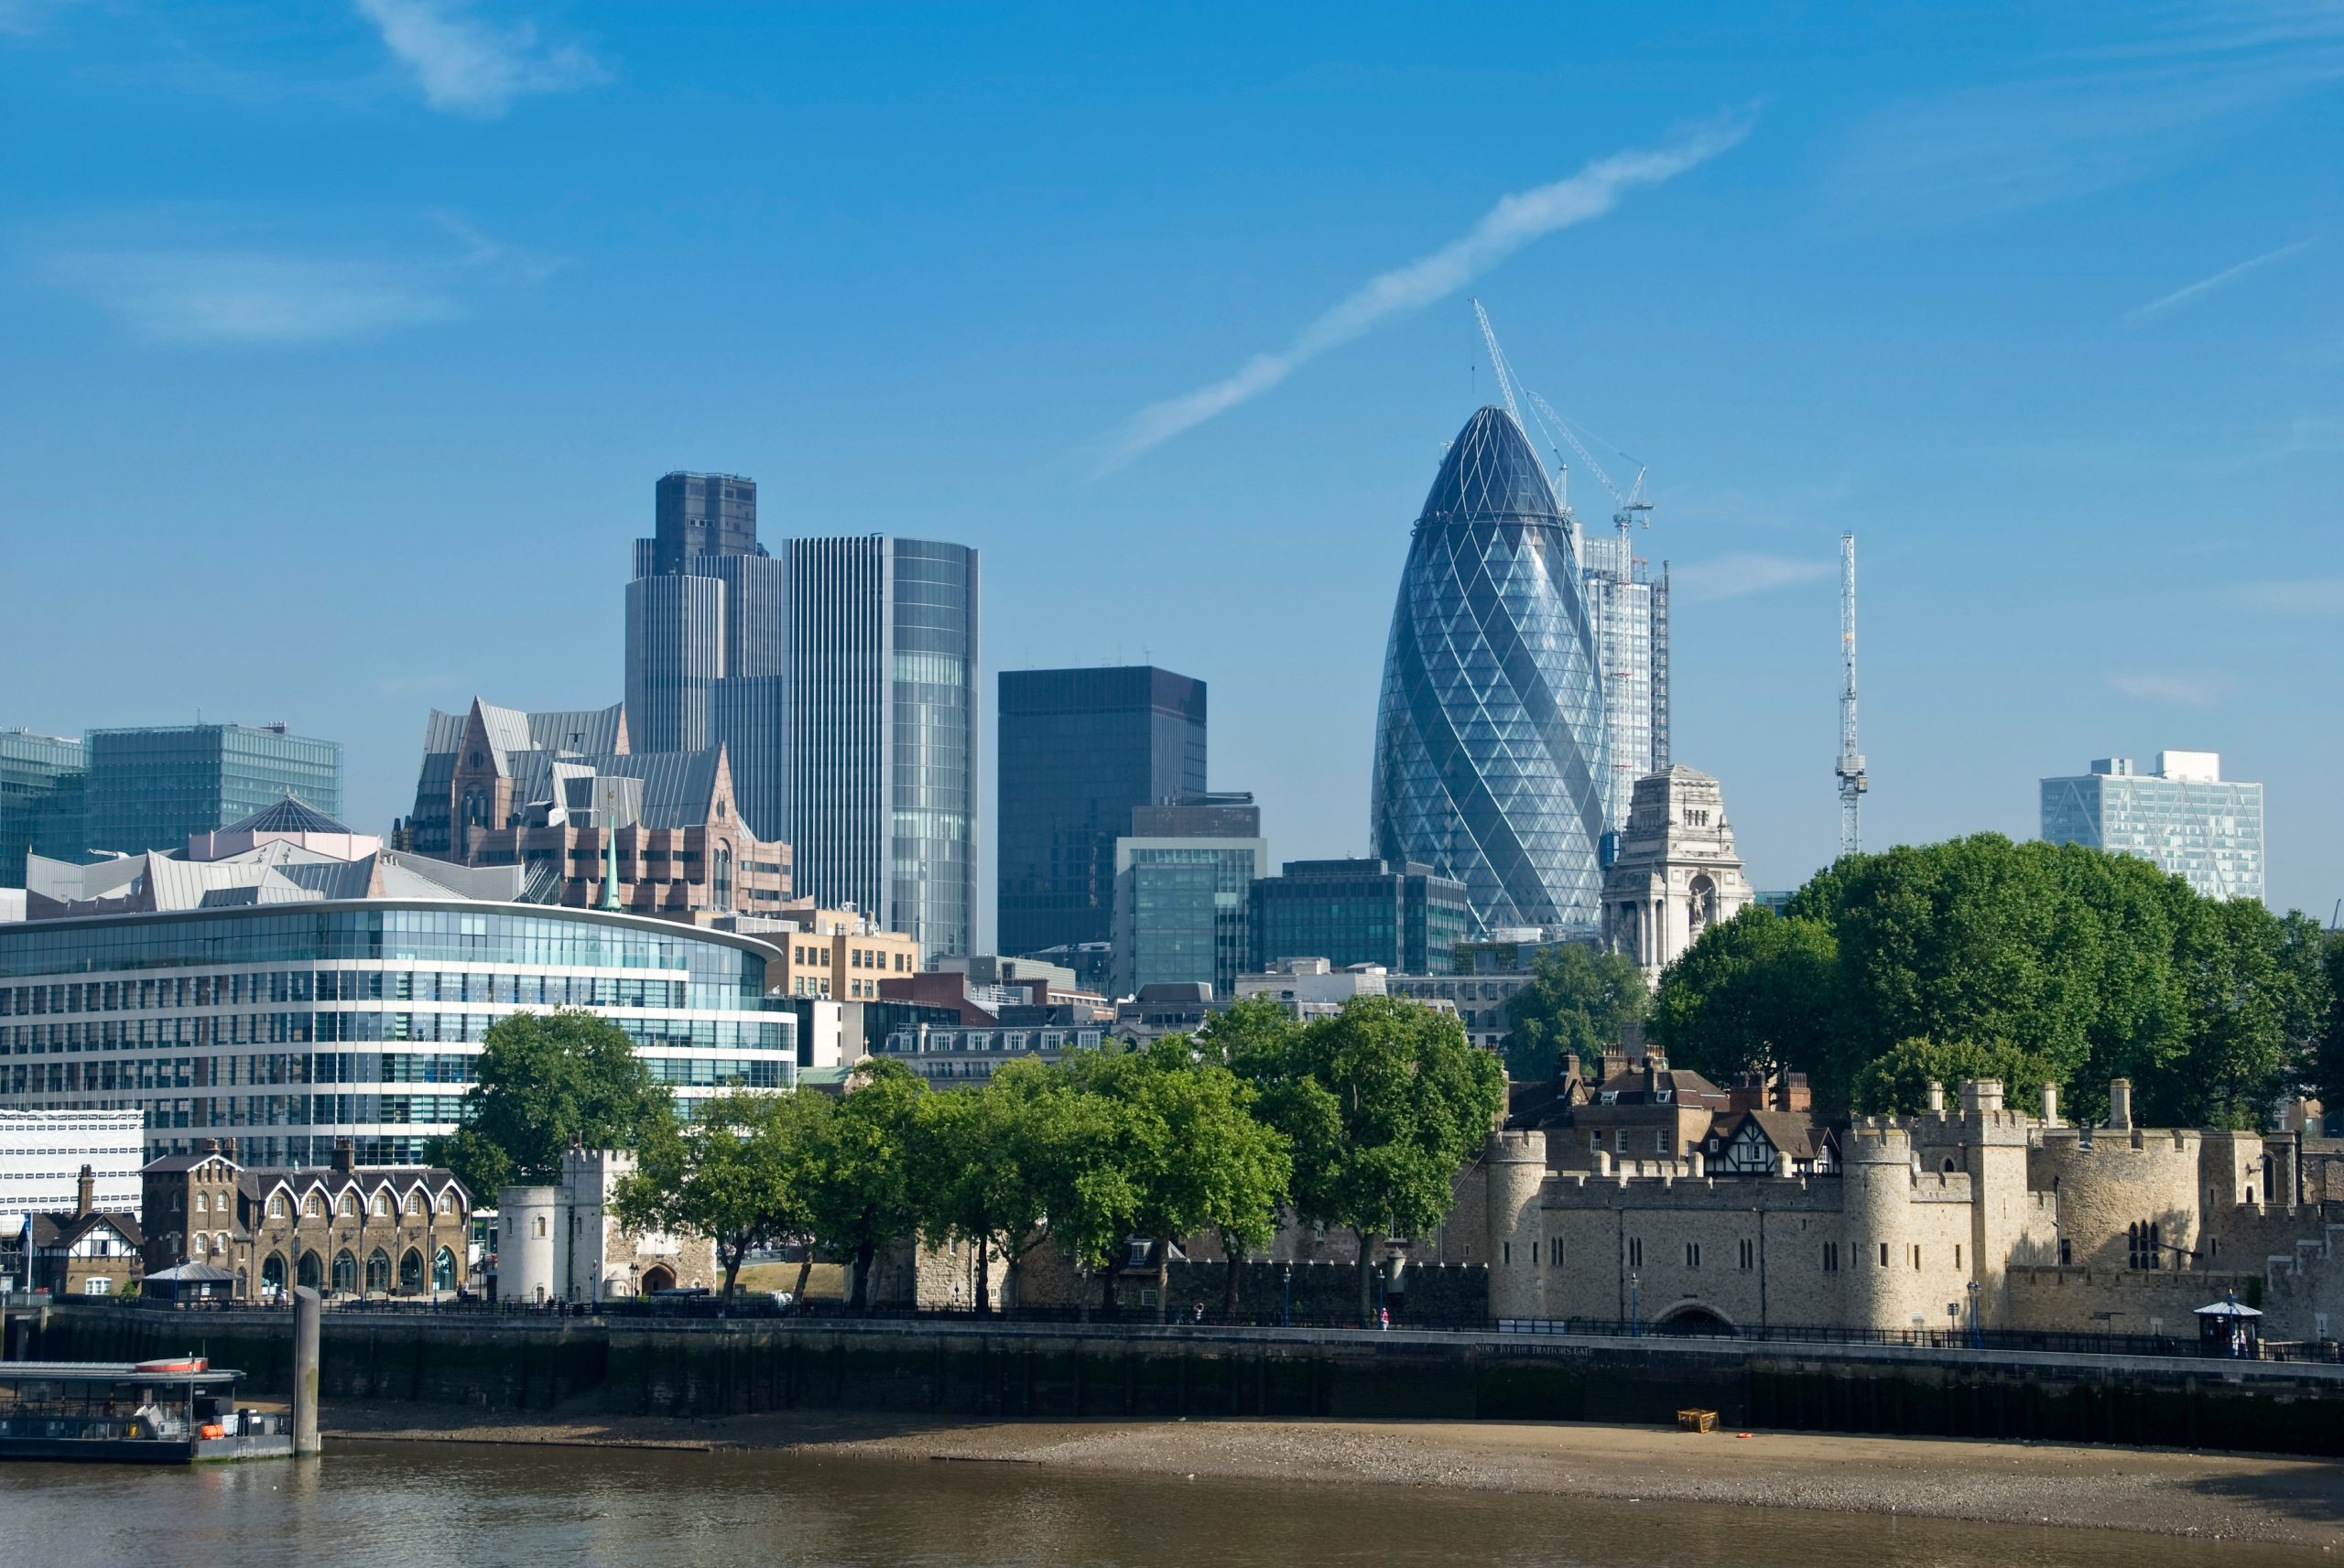 City of London skyline with Gherkin in shot